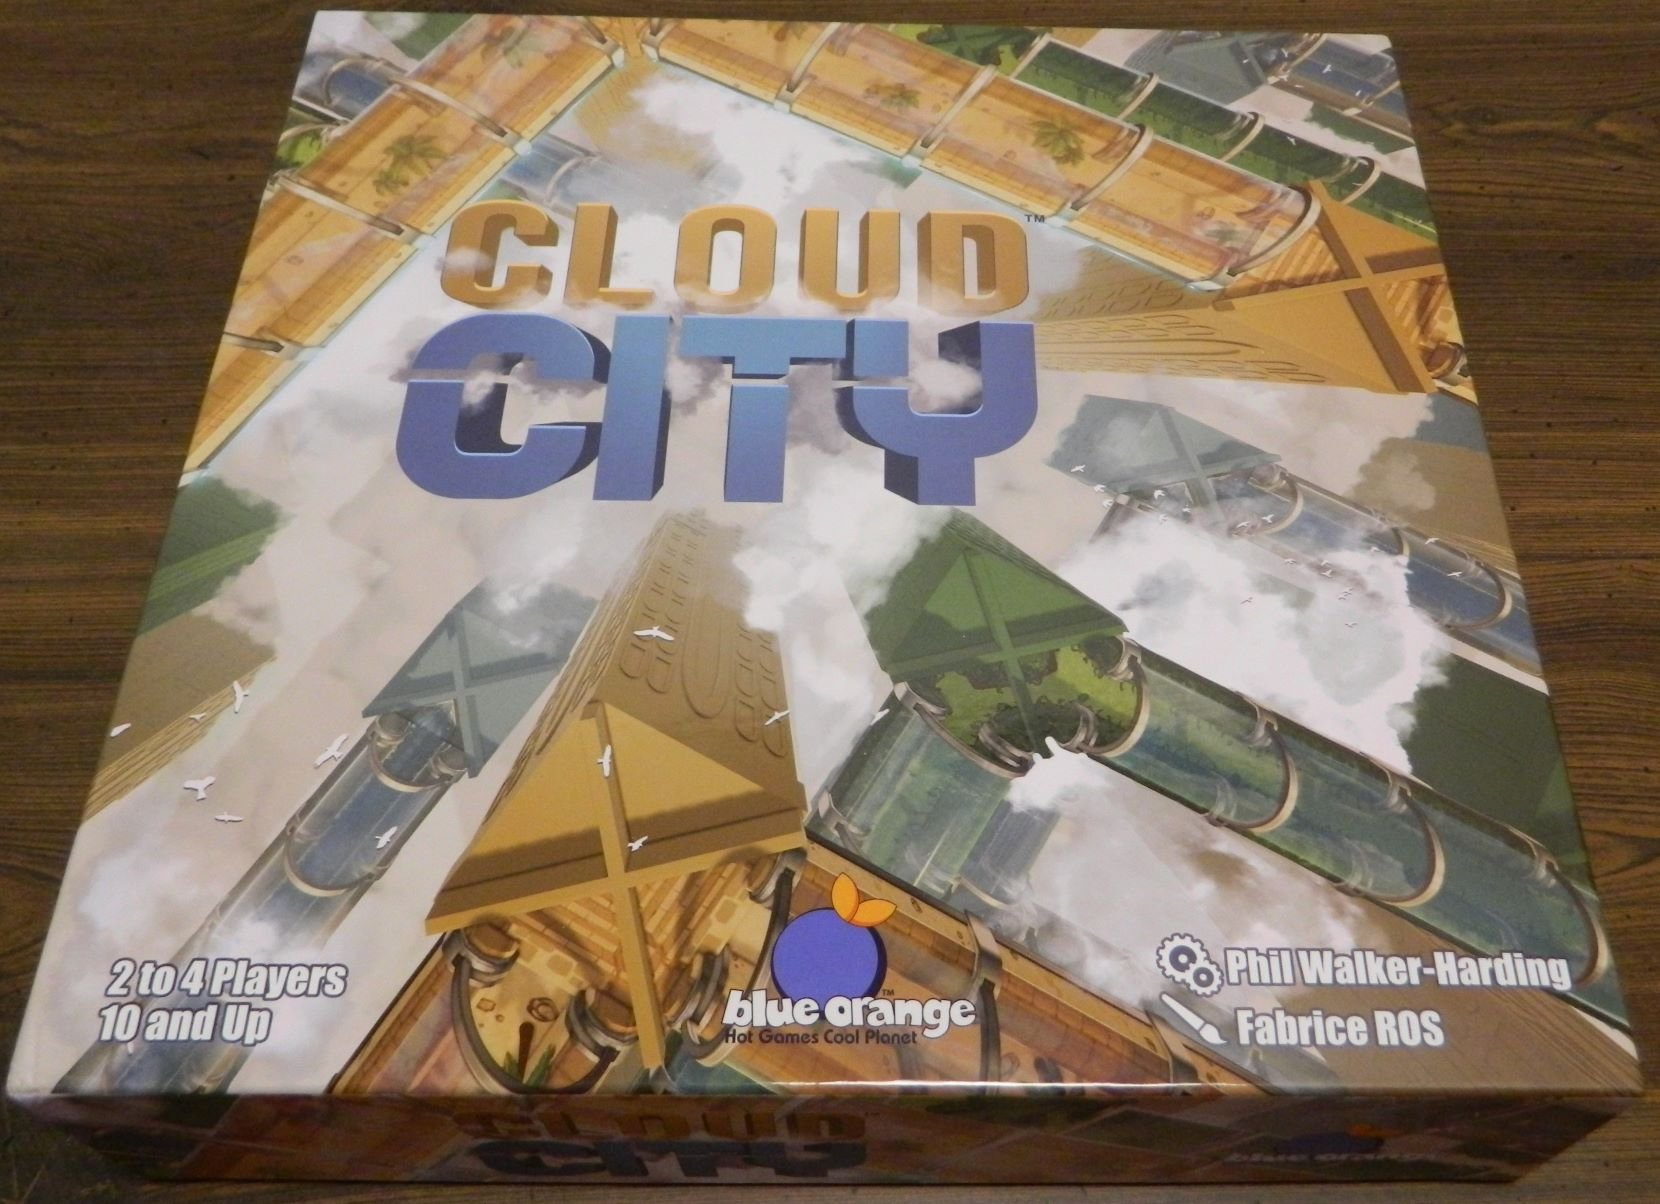 Box for Cloud City